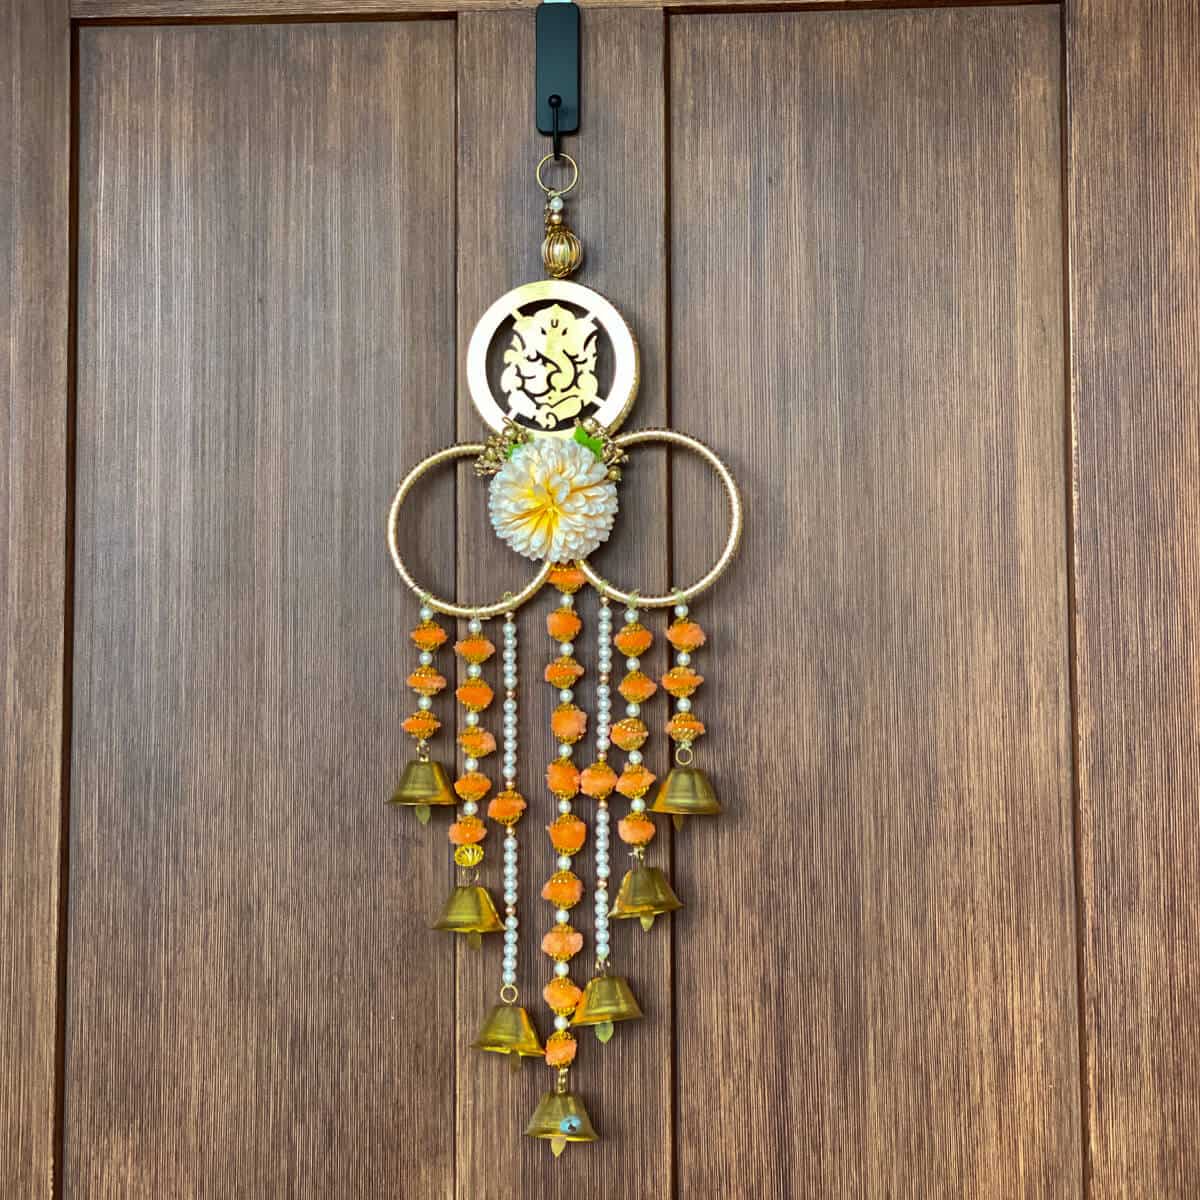 Front door hanging with Ganesha on it